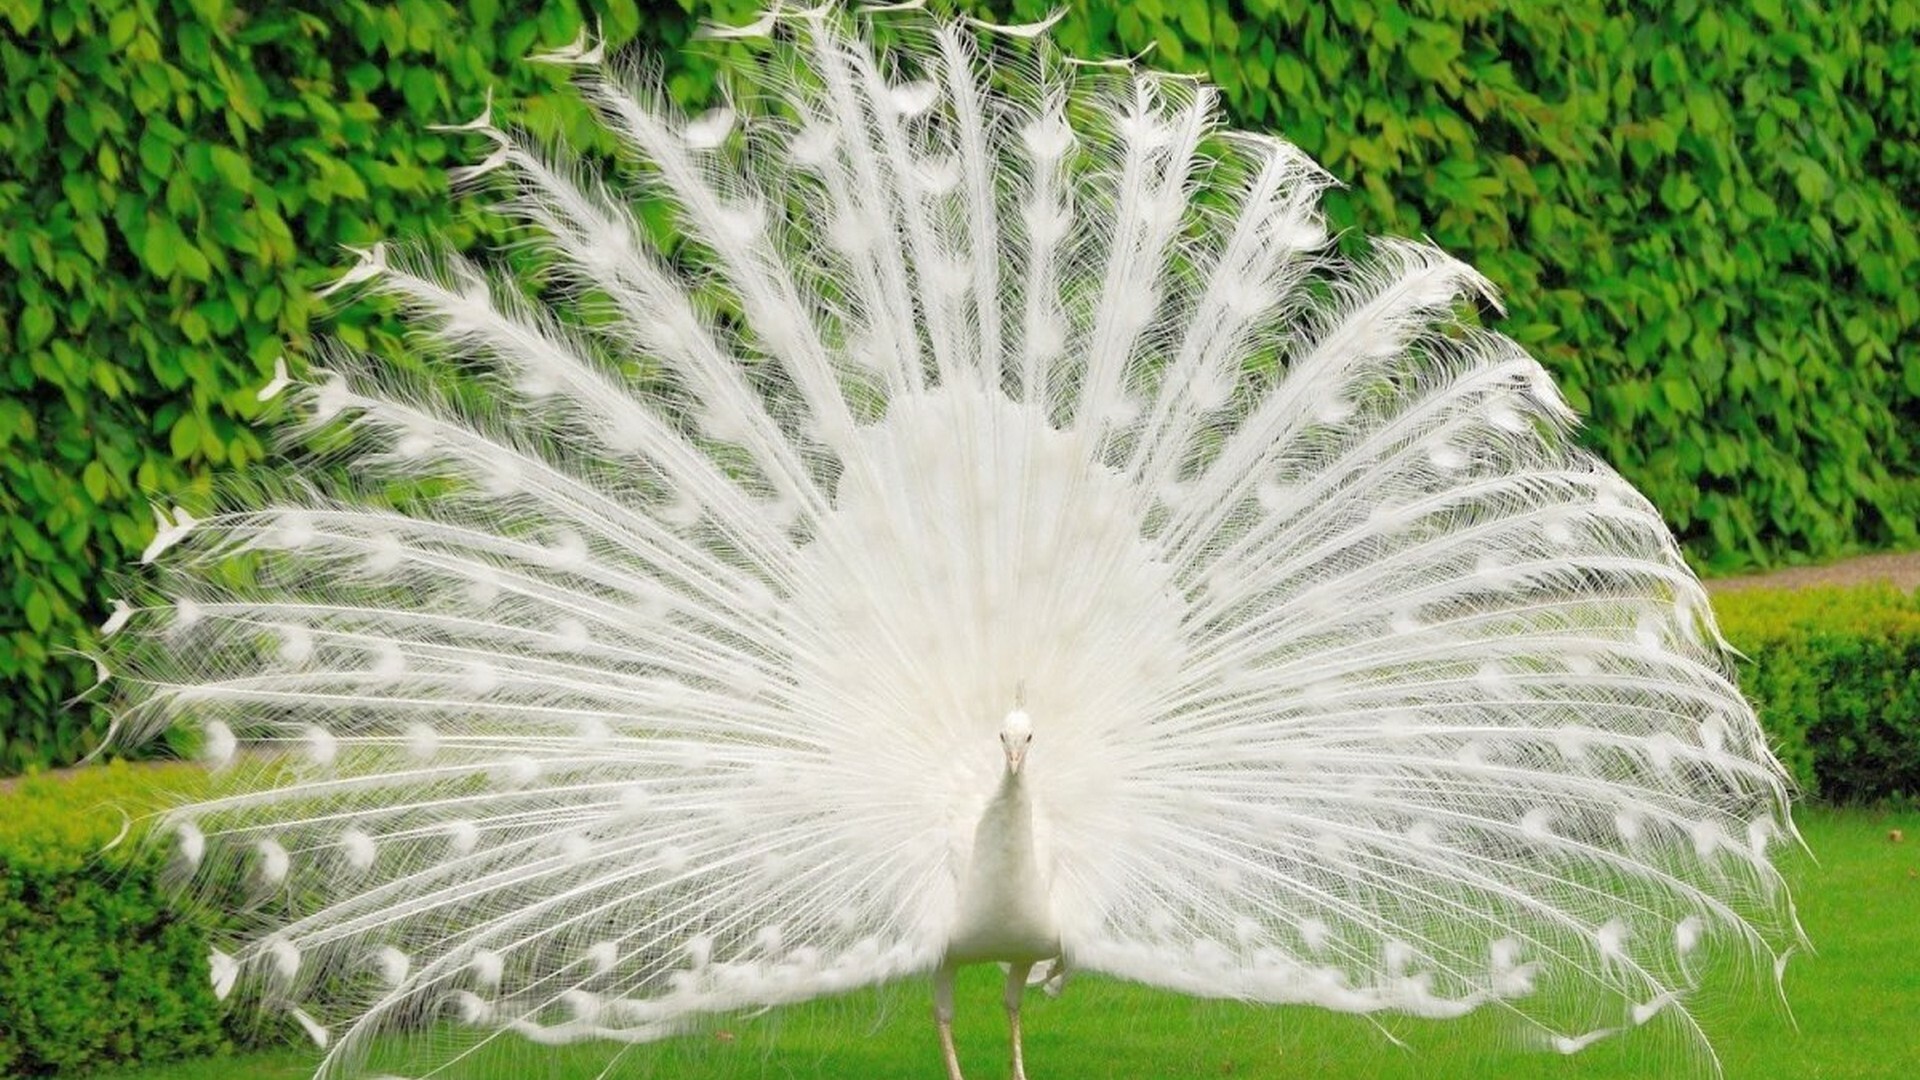 Peacock: In Buddhist philosophy, the Peafowl represents wisdom. 1920x1080 Full HD Wallpaper.